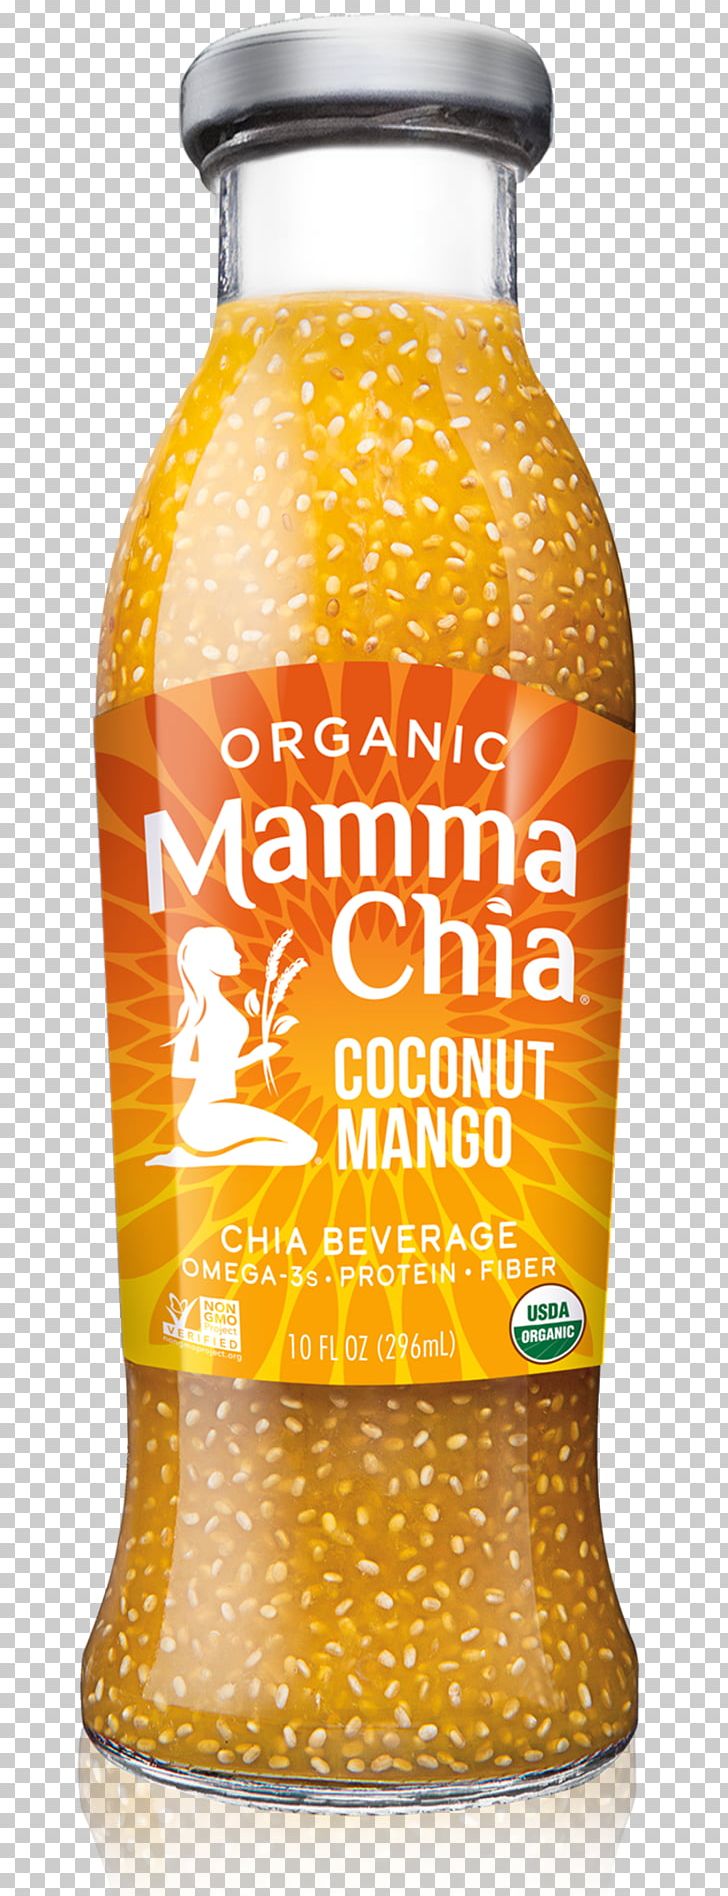 Lemonade Orange Drink Juice Organic Food Chia Seed PNG, Clipart, Chia, Chia Seed, Drink, Food, Food Drinks Free PNG Download